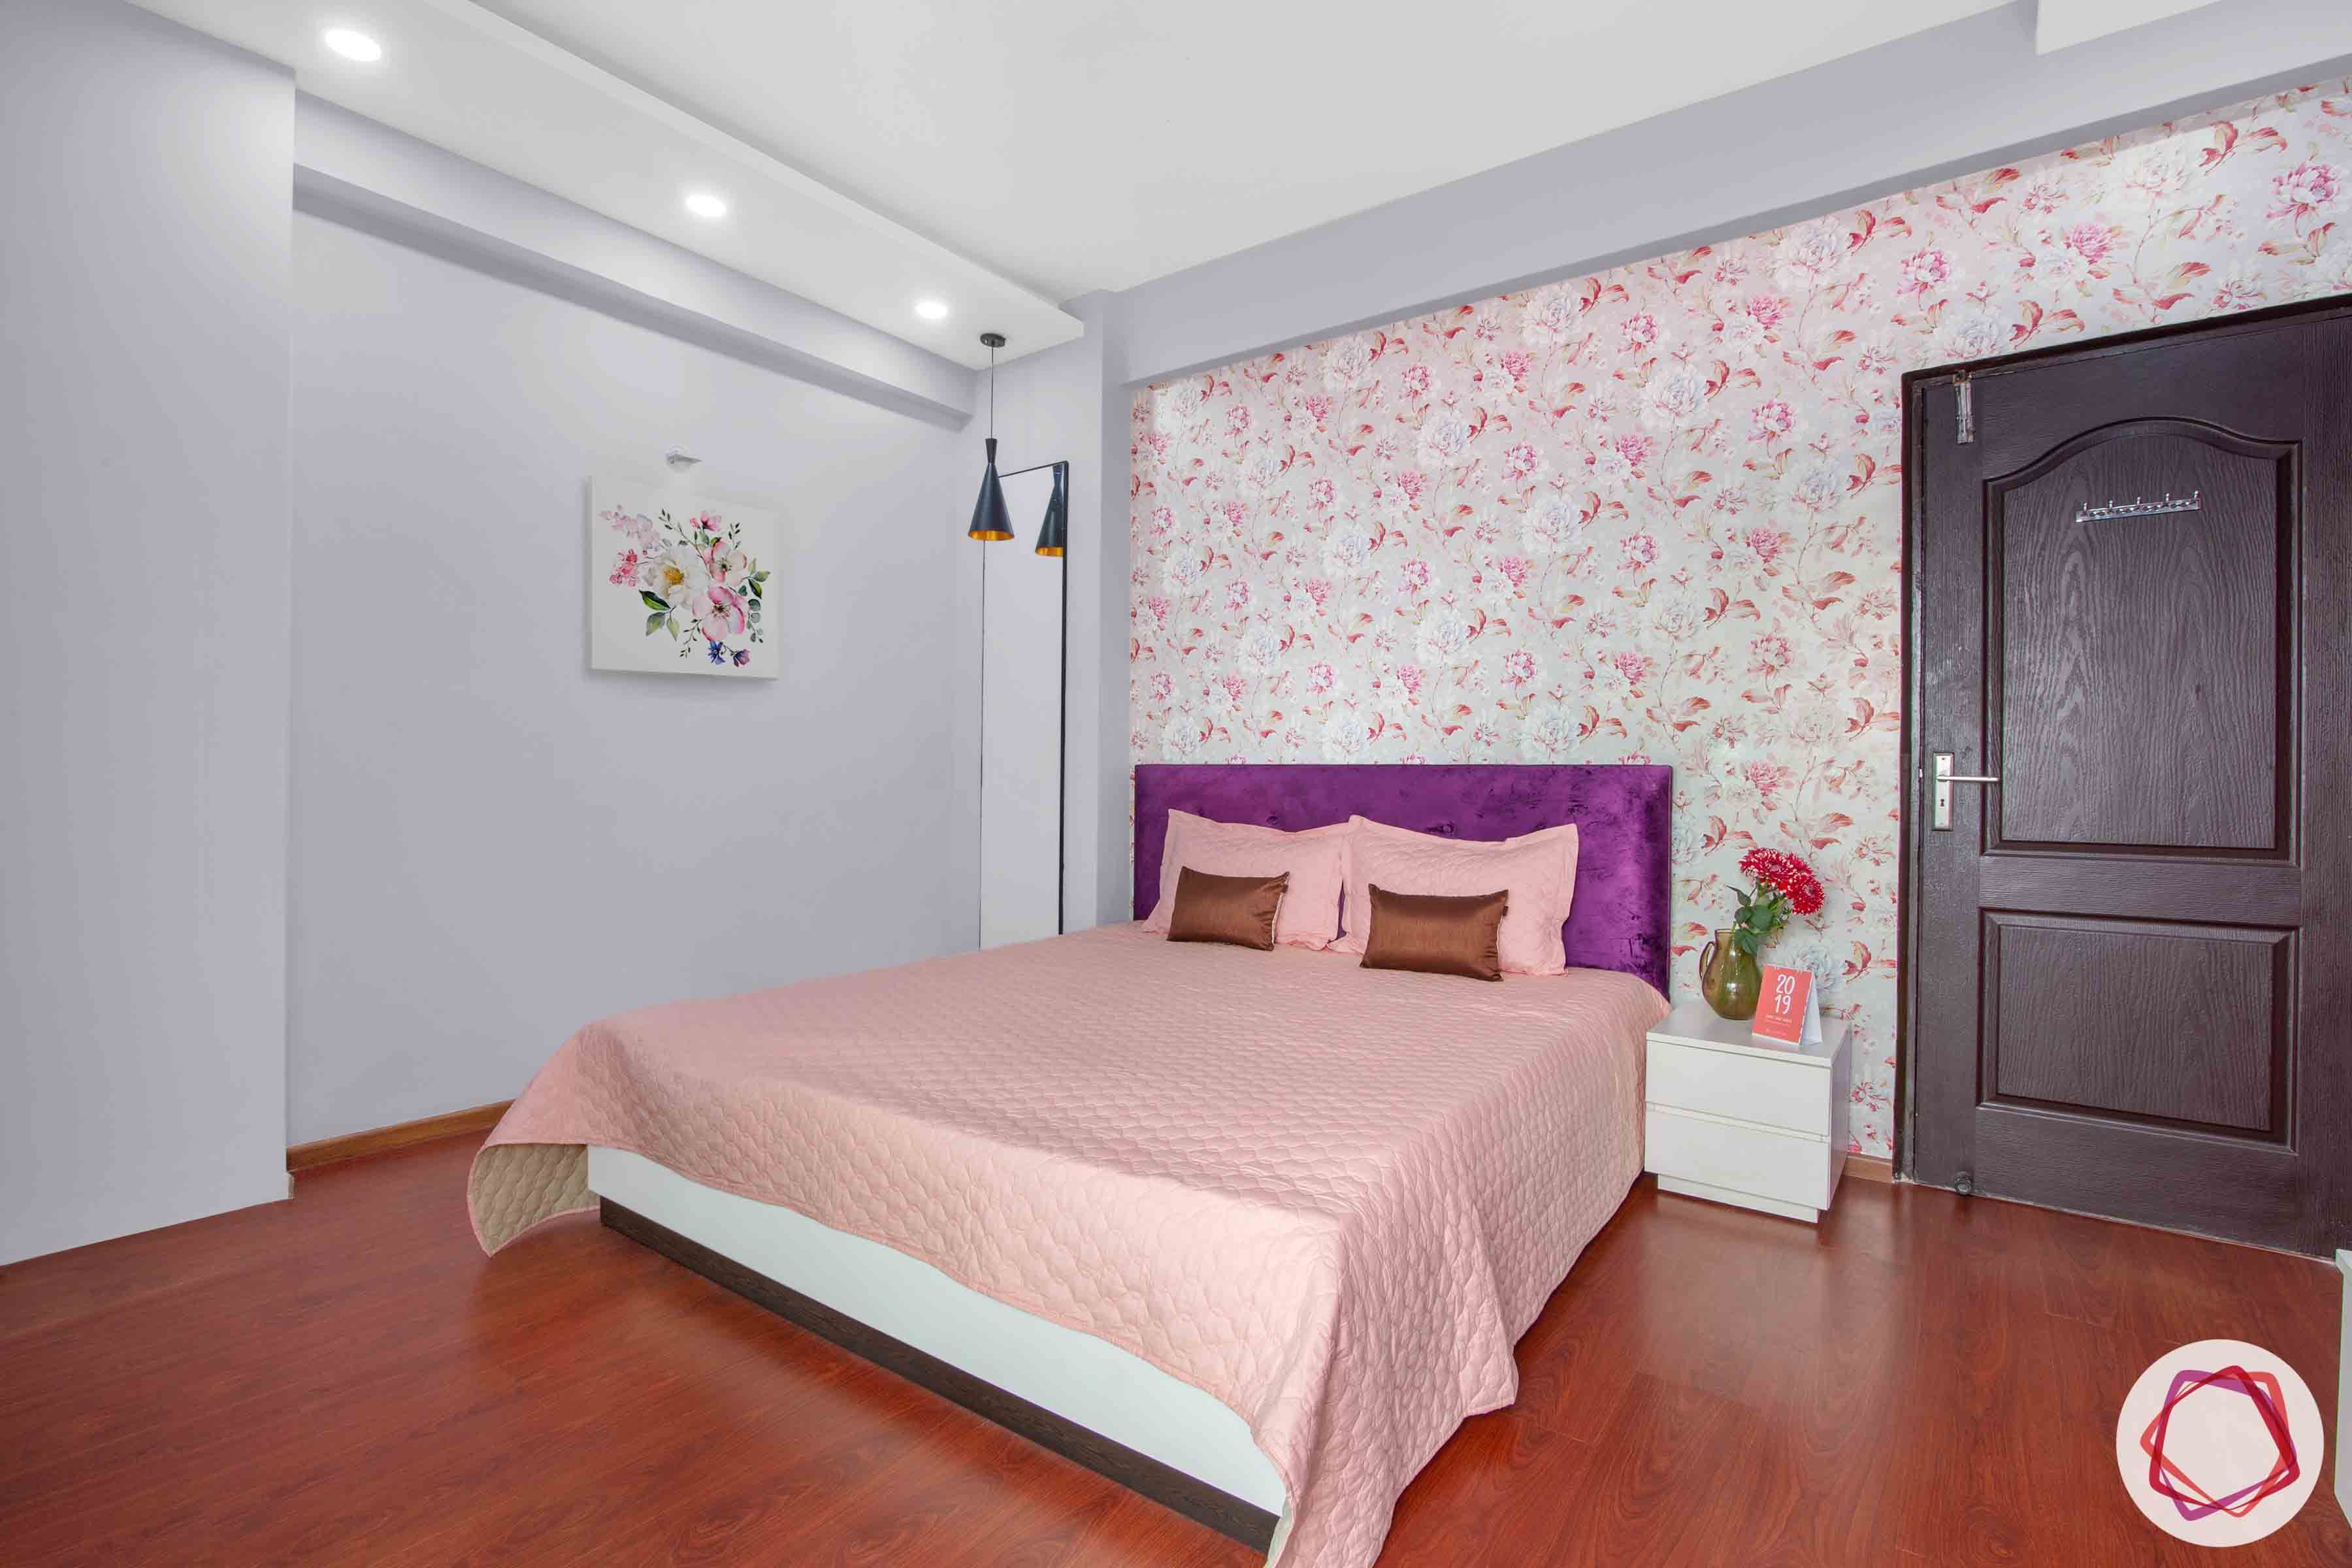 3bhk flat interior design-floral wallpaper designs-purple headboard designs